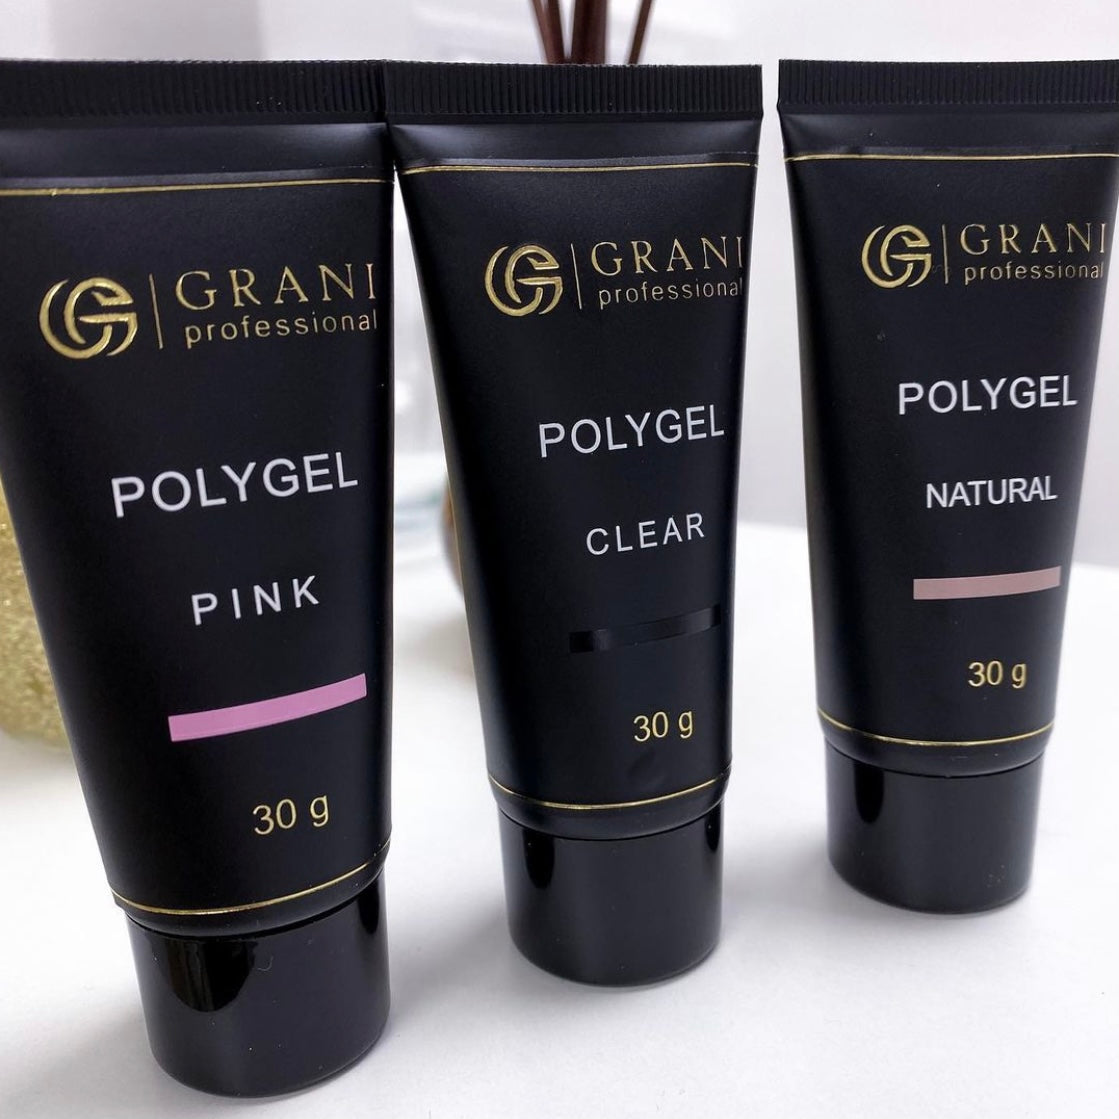 GRANI POLYGEL - CLEAR (30 g)